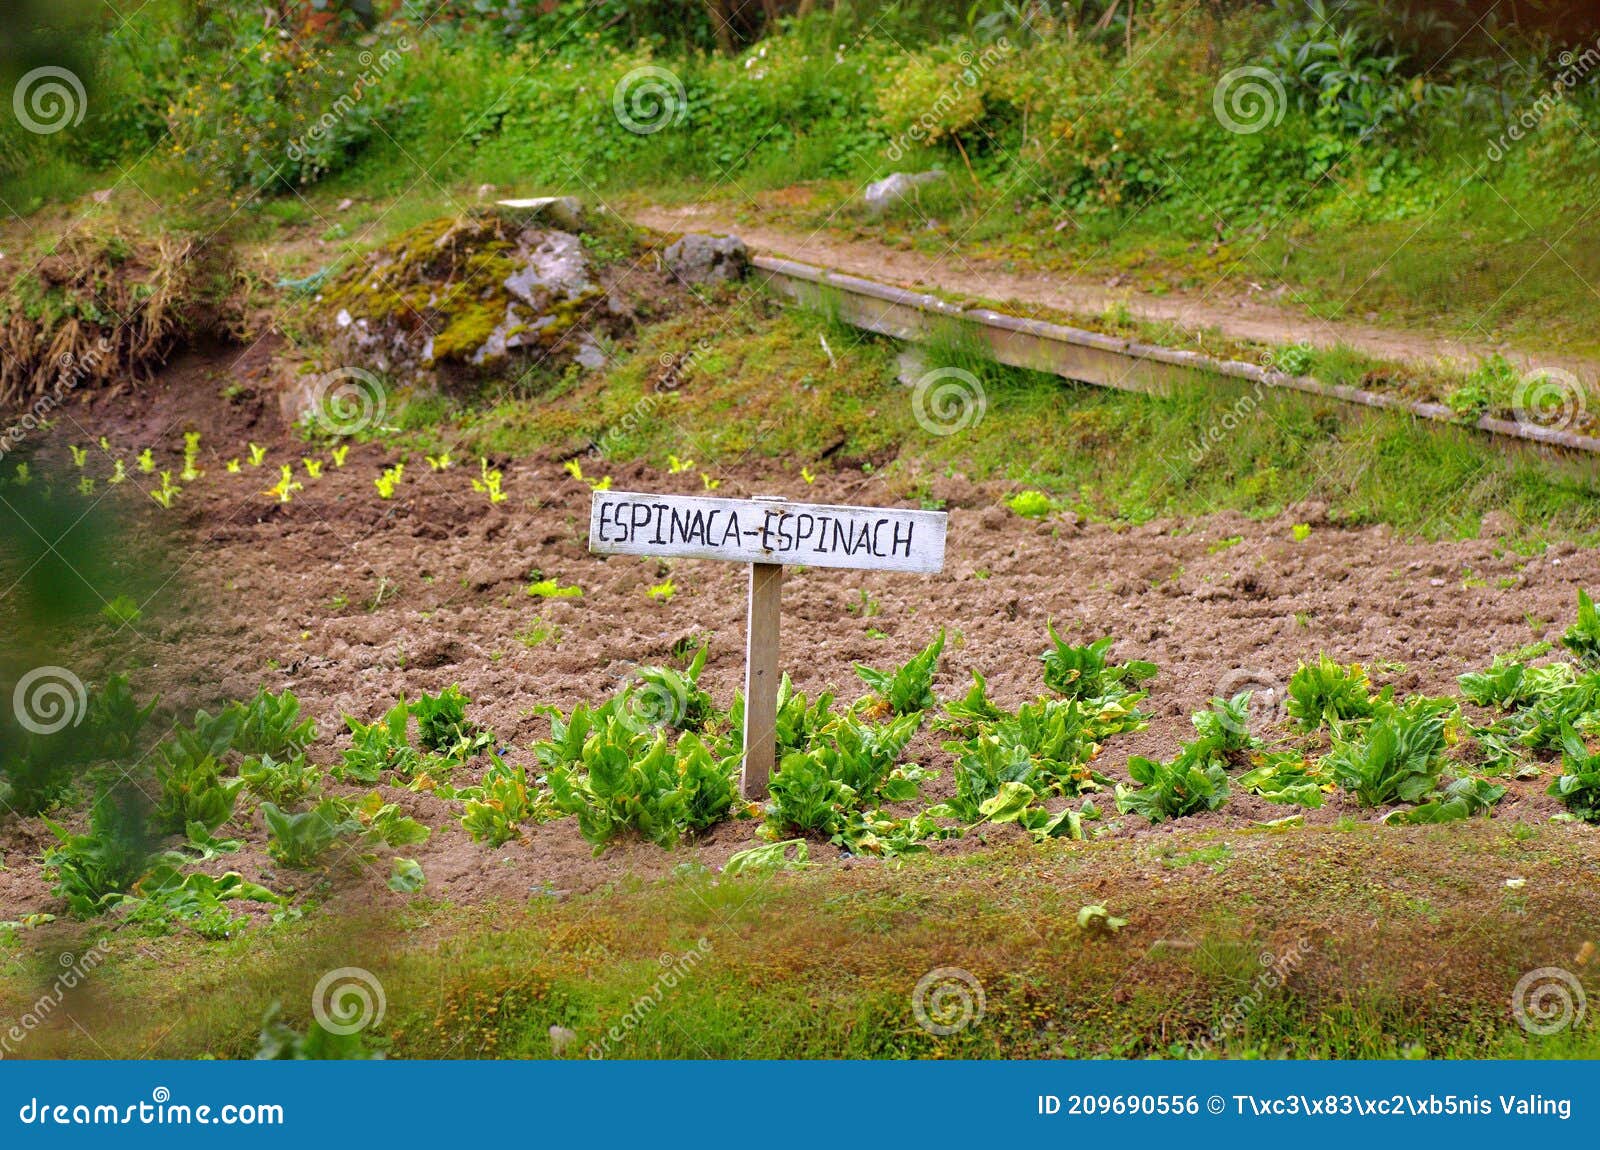 garden spanish sign for espinacaspinach